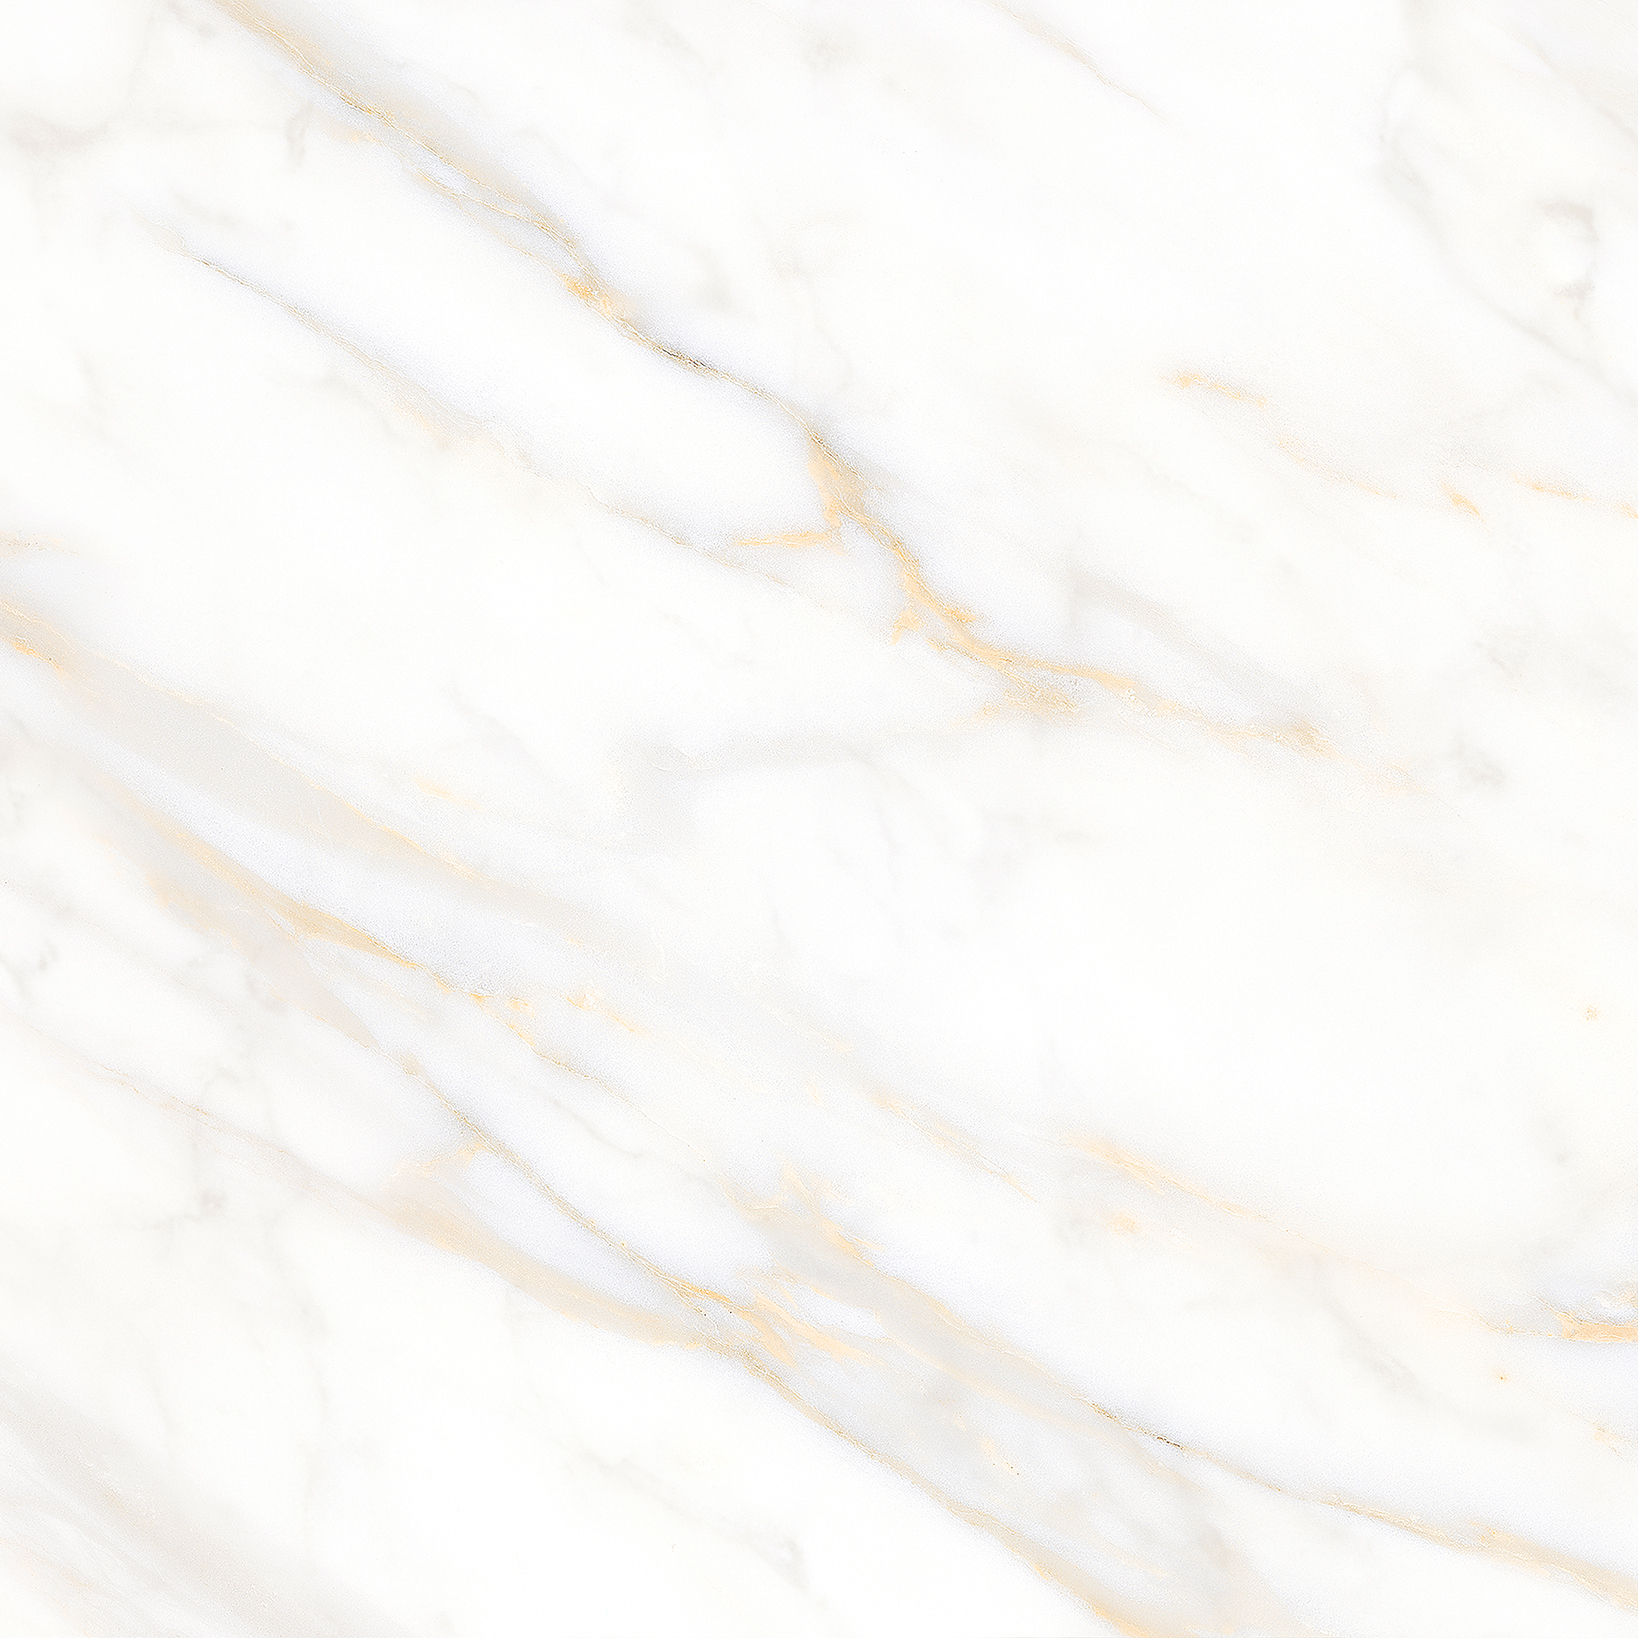 Natural white marble  background,  italian carrara stone texture